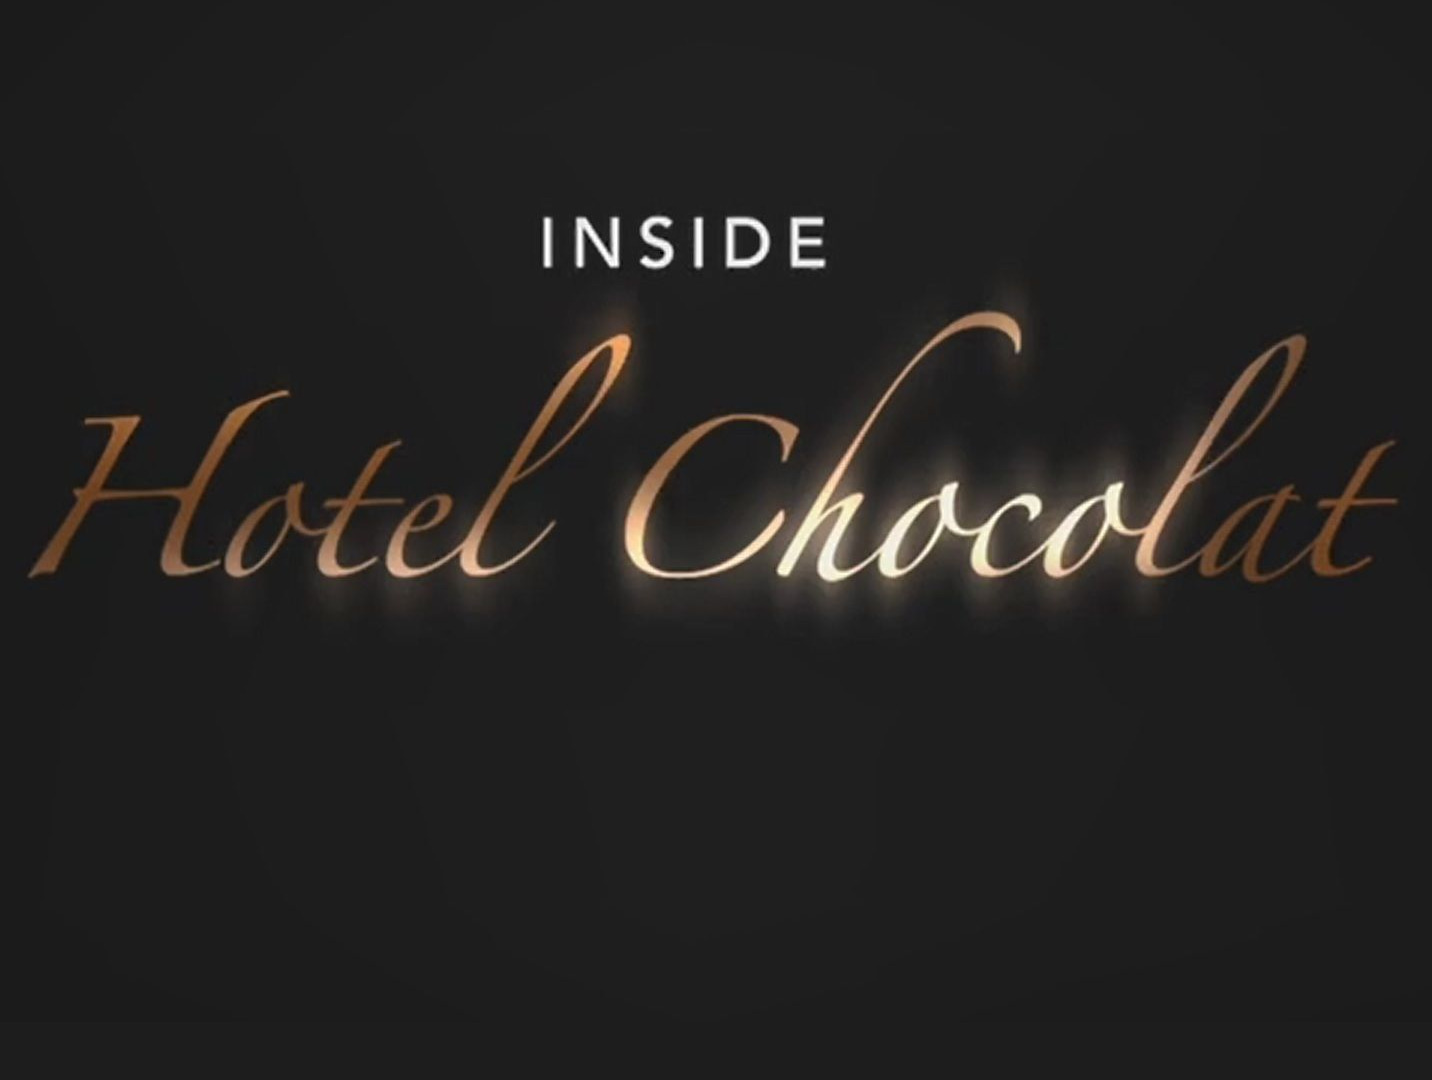 Show Inside Hotel Chocolat